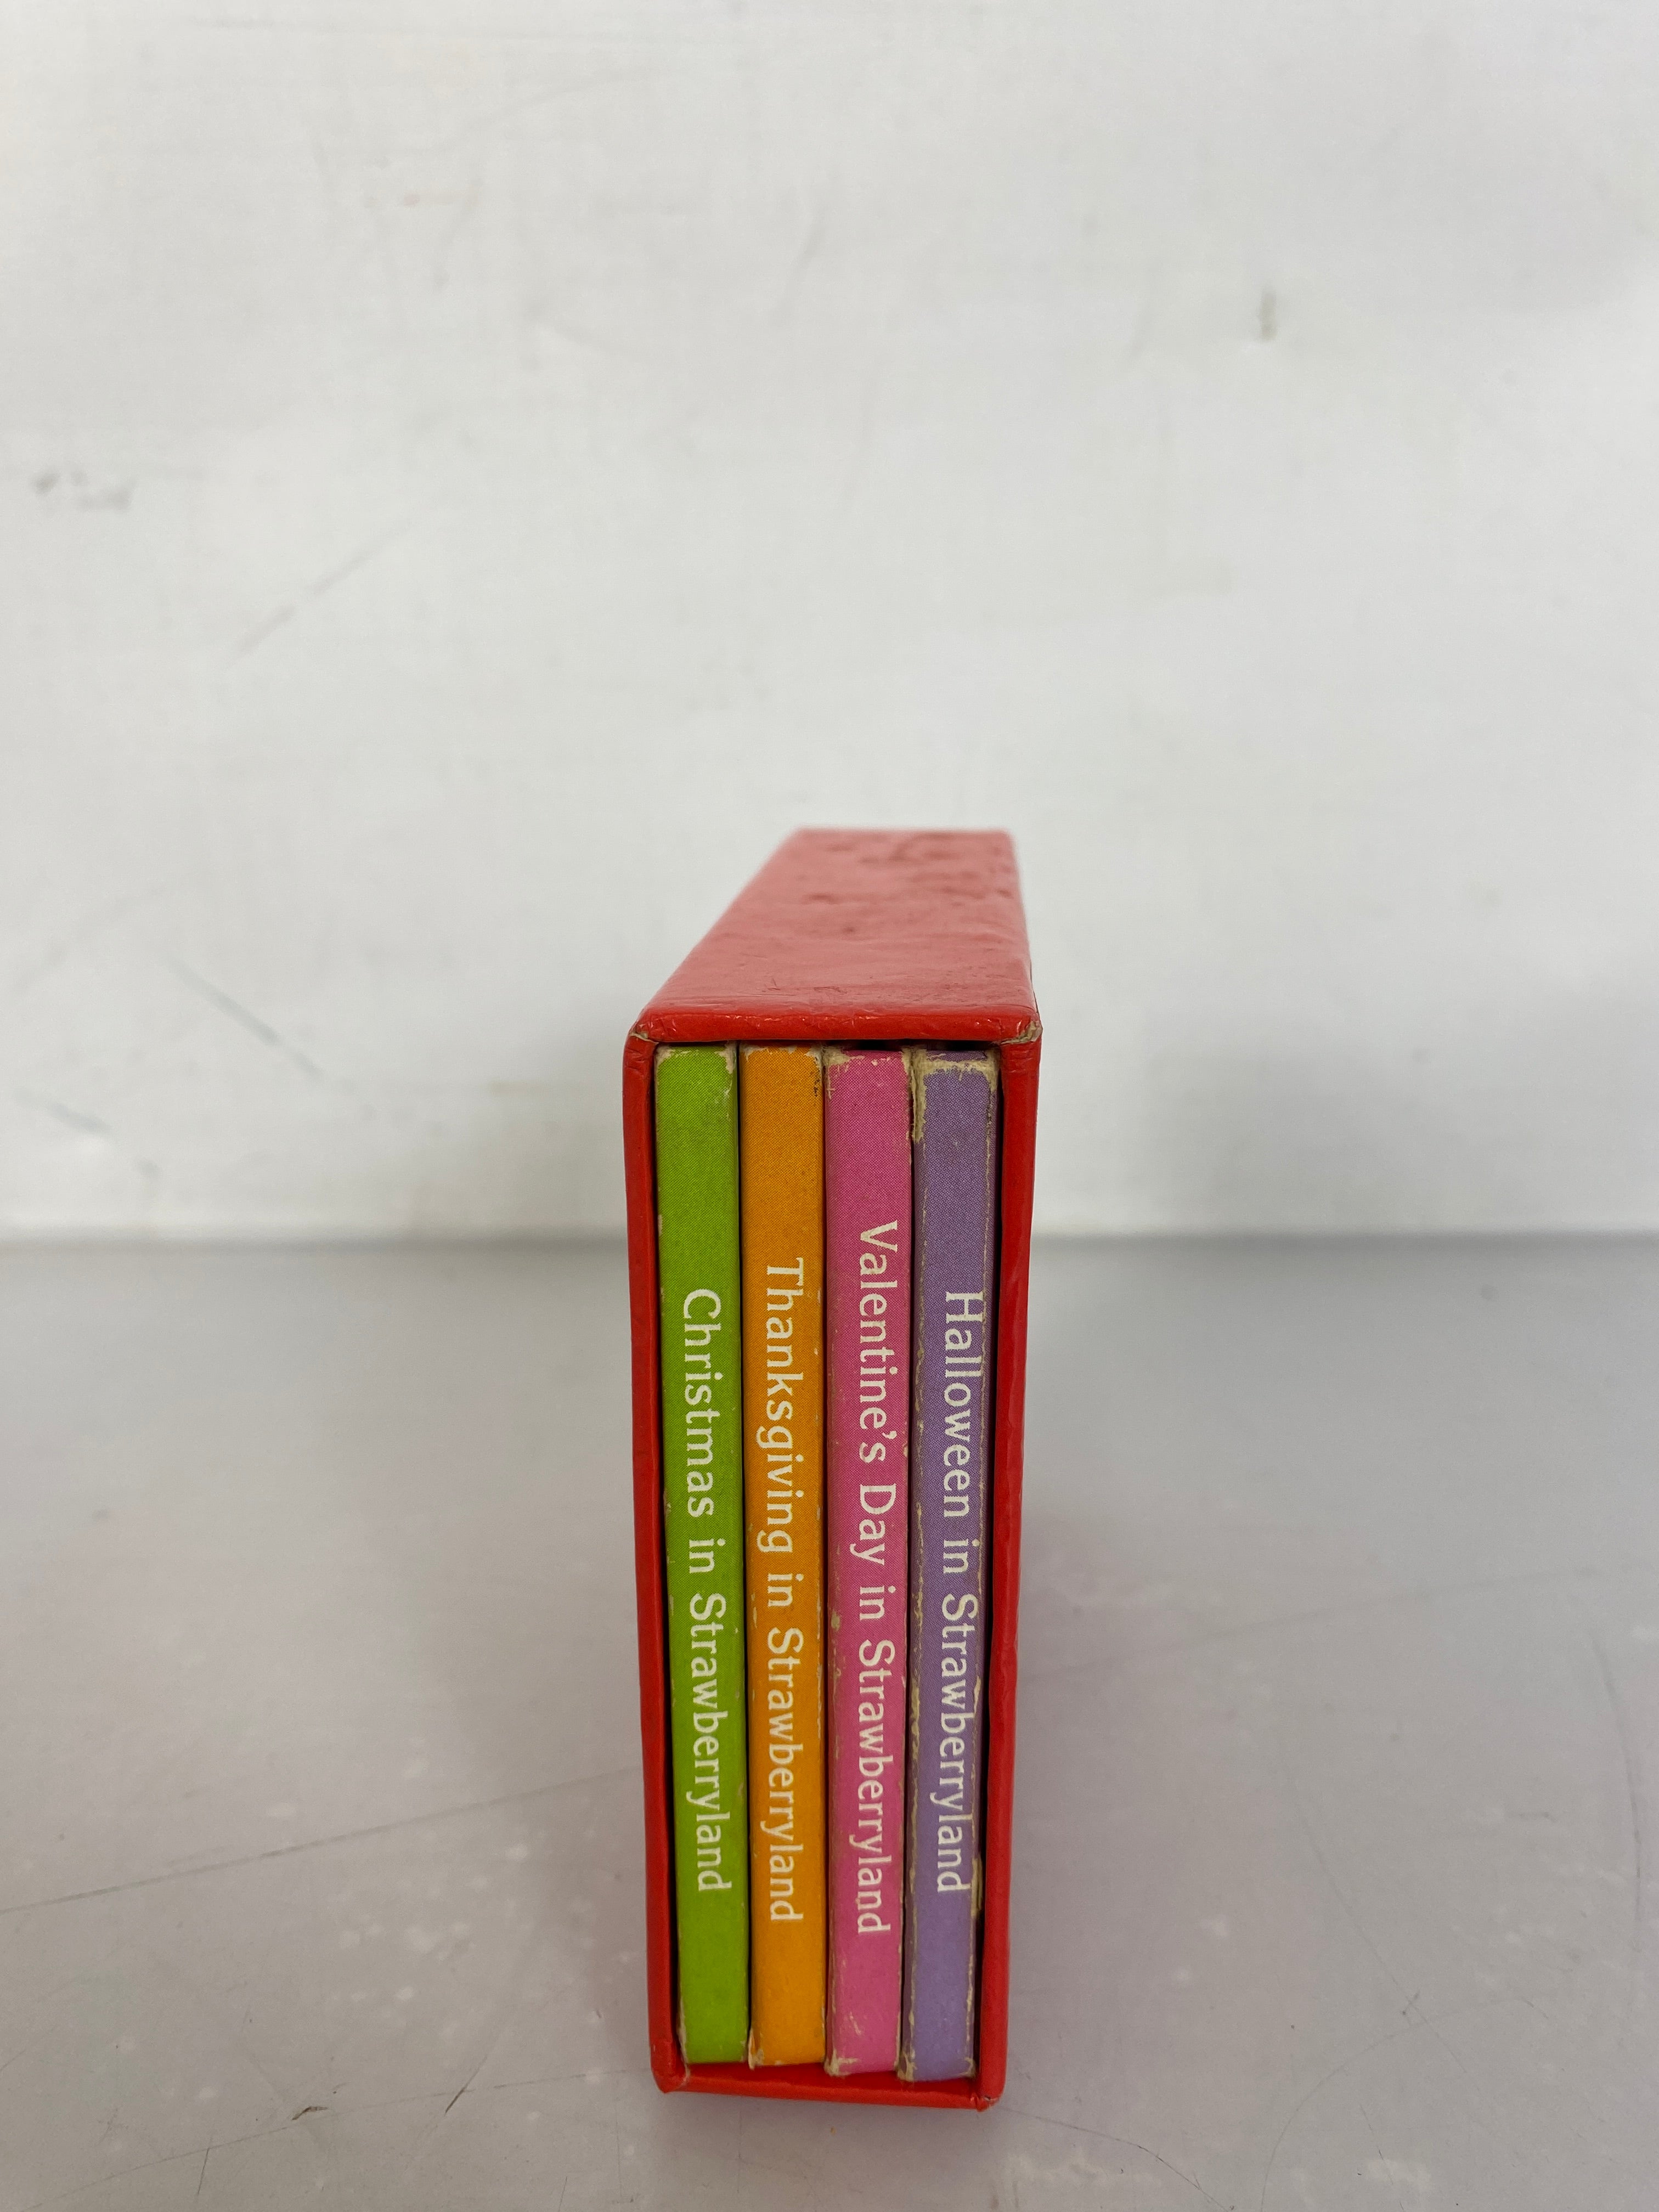 Strawberry Shortcake's Holiday Library 1983 Set of 4 Books and Slipcase